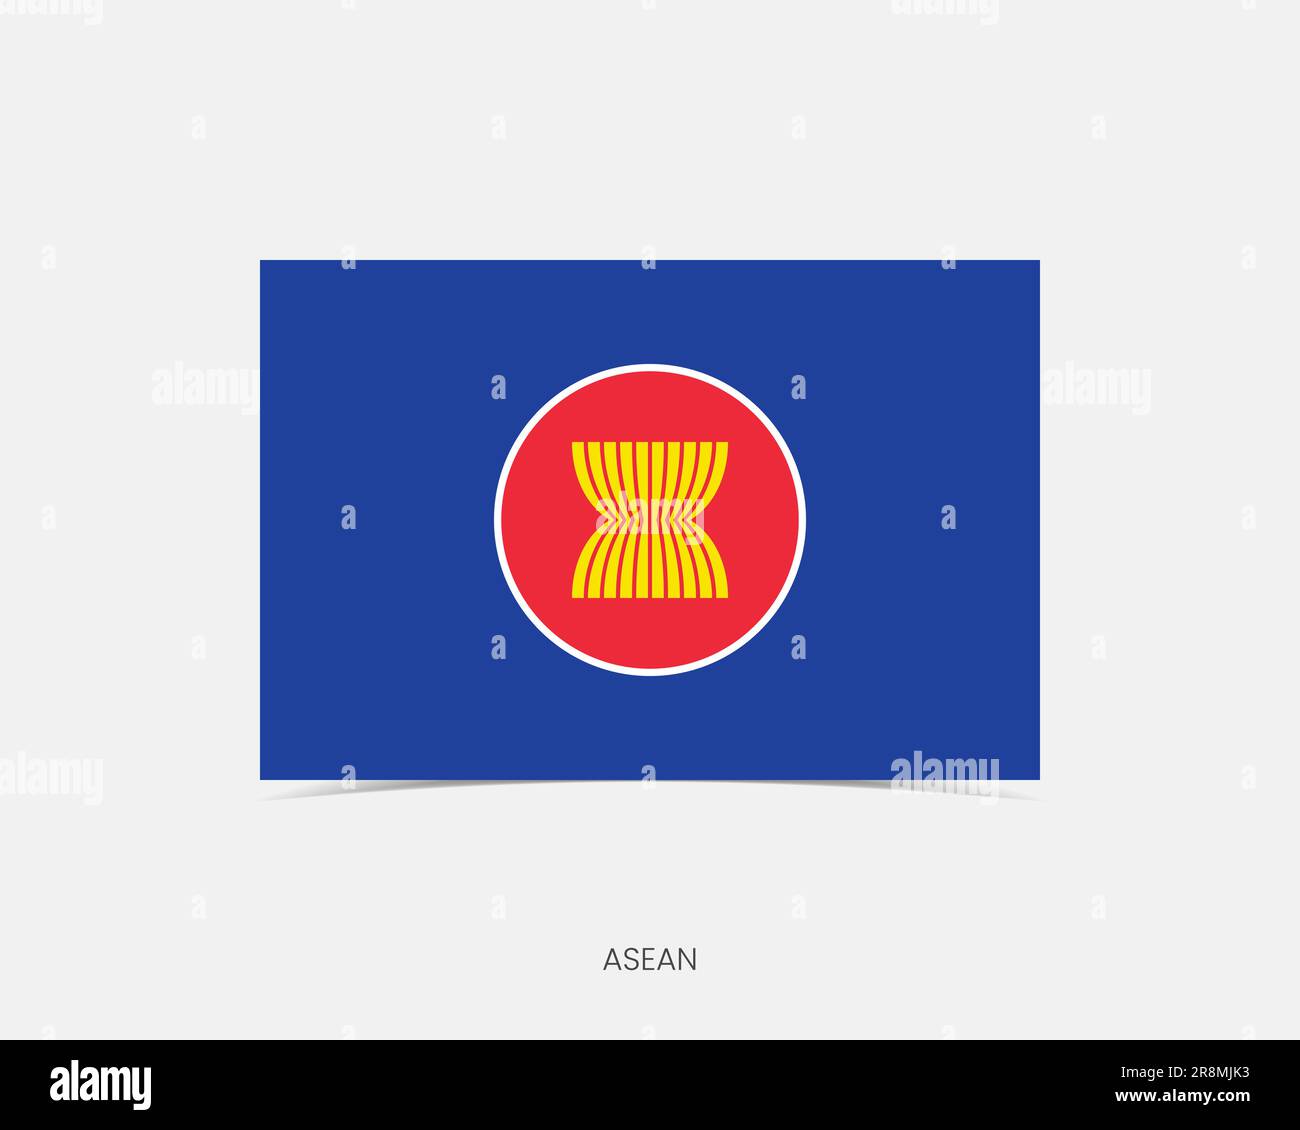 ASEAN Rectangle flag icon with shadow. Stock Vector